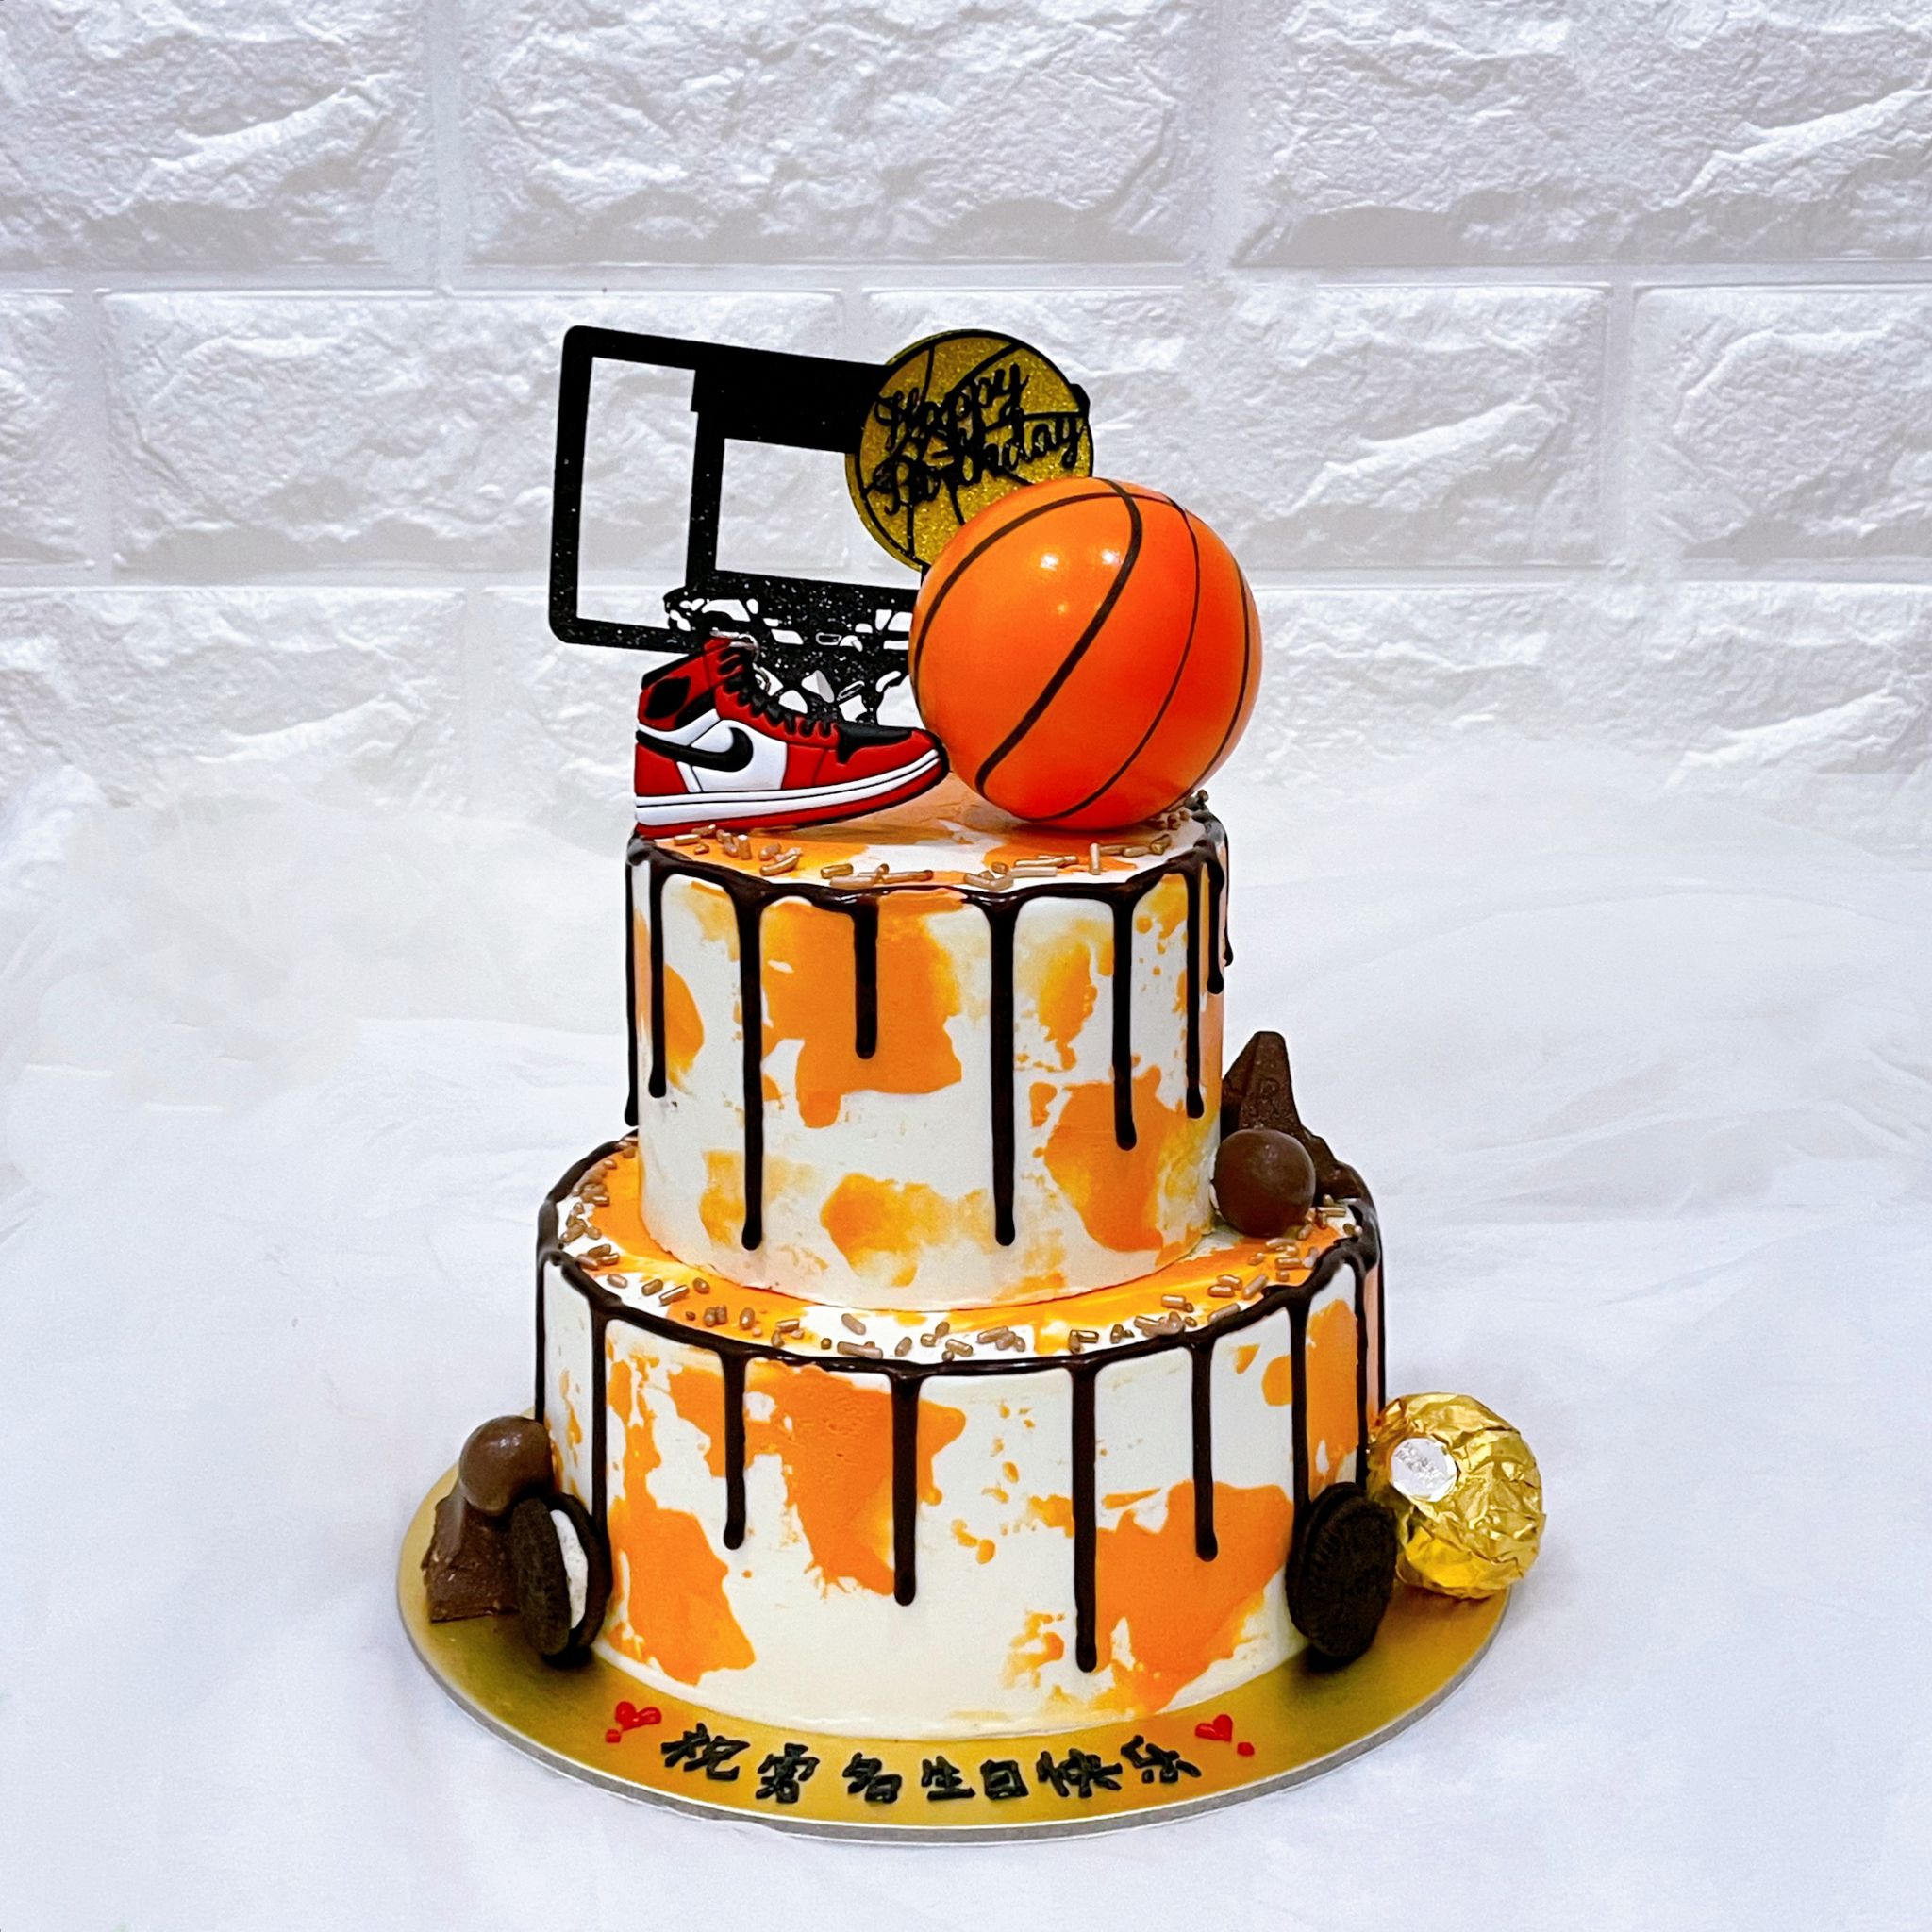 basketball theme cake, Food & Drinks, Homemade Bakes on Carousell